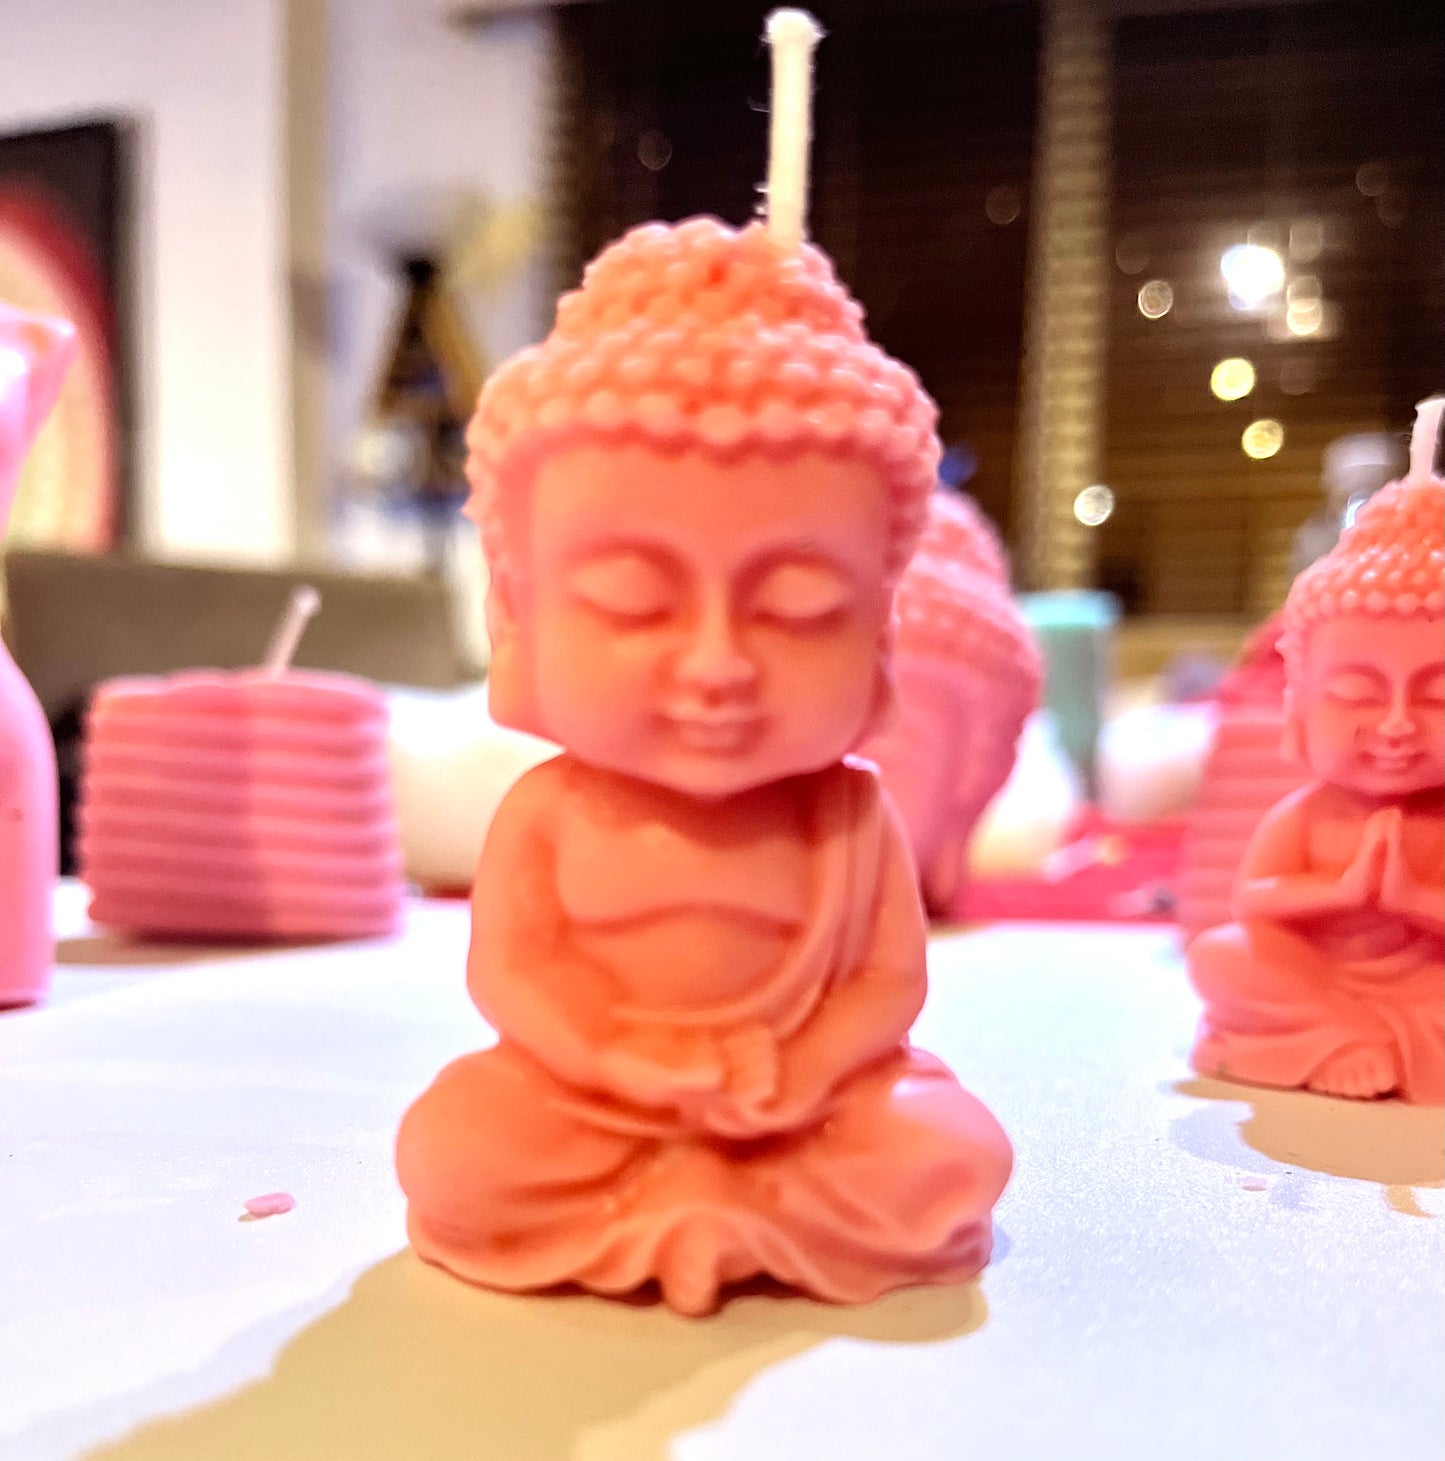 Pink Cute Buddha Candles